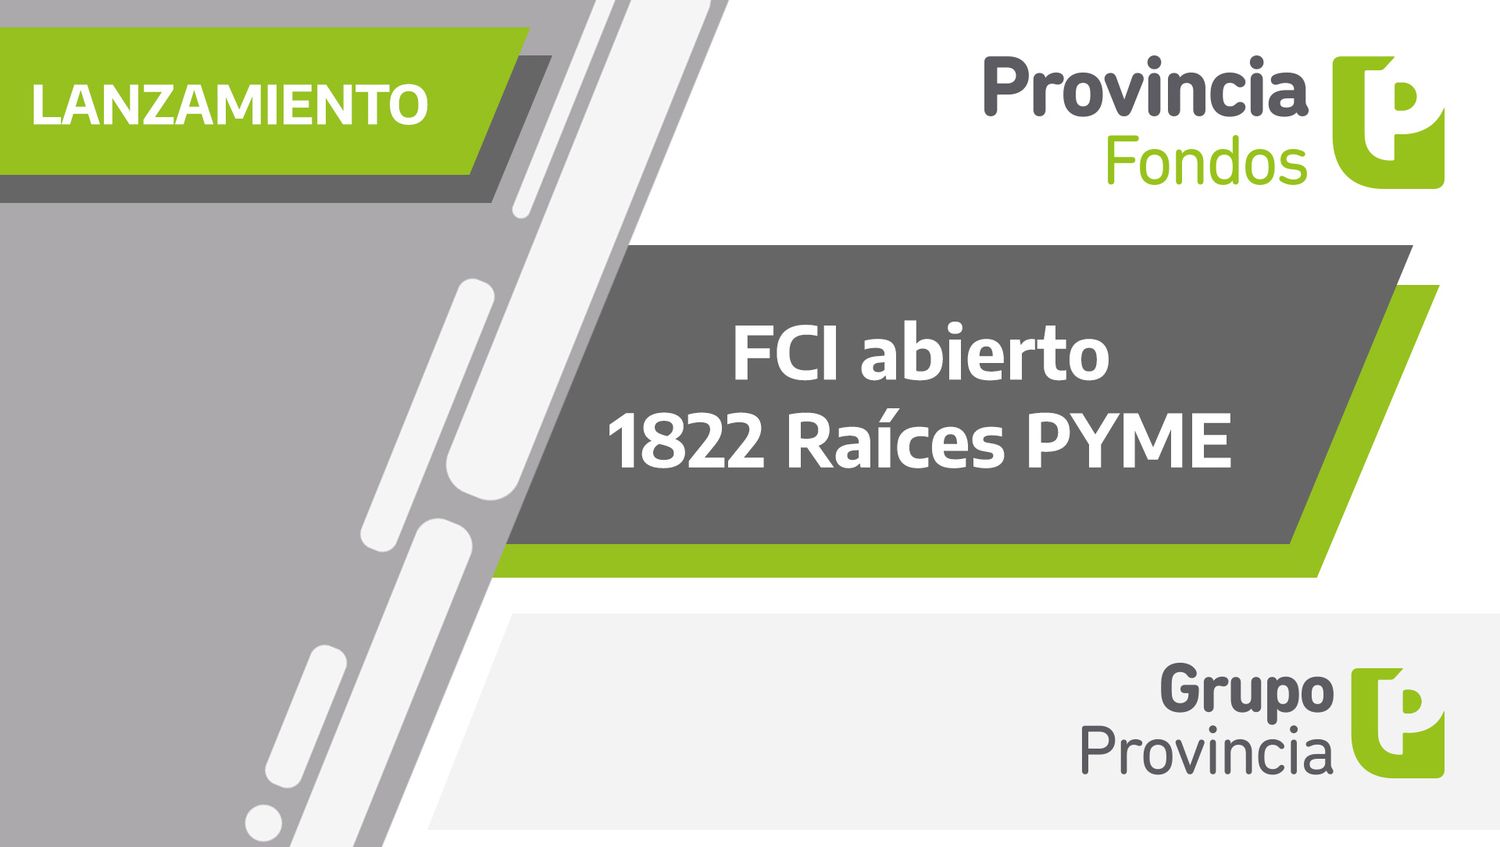 Financiamiento de Pymes: Provincia Fondos lanzó “Fondo 1822 Raíces PYME"